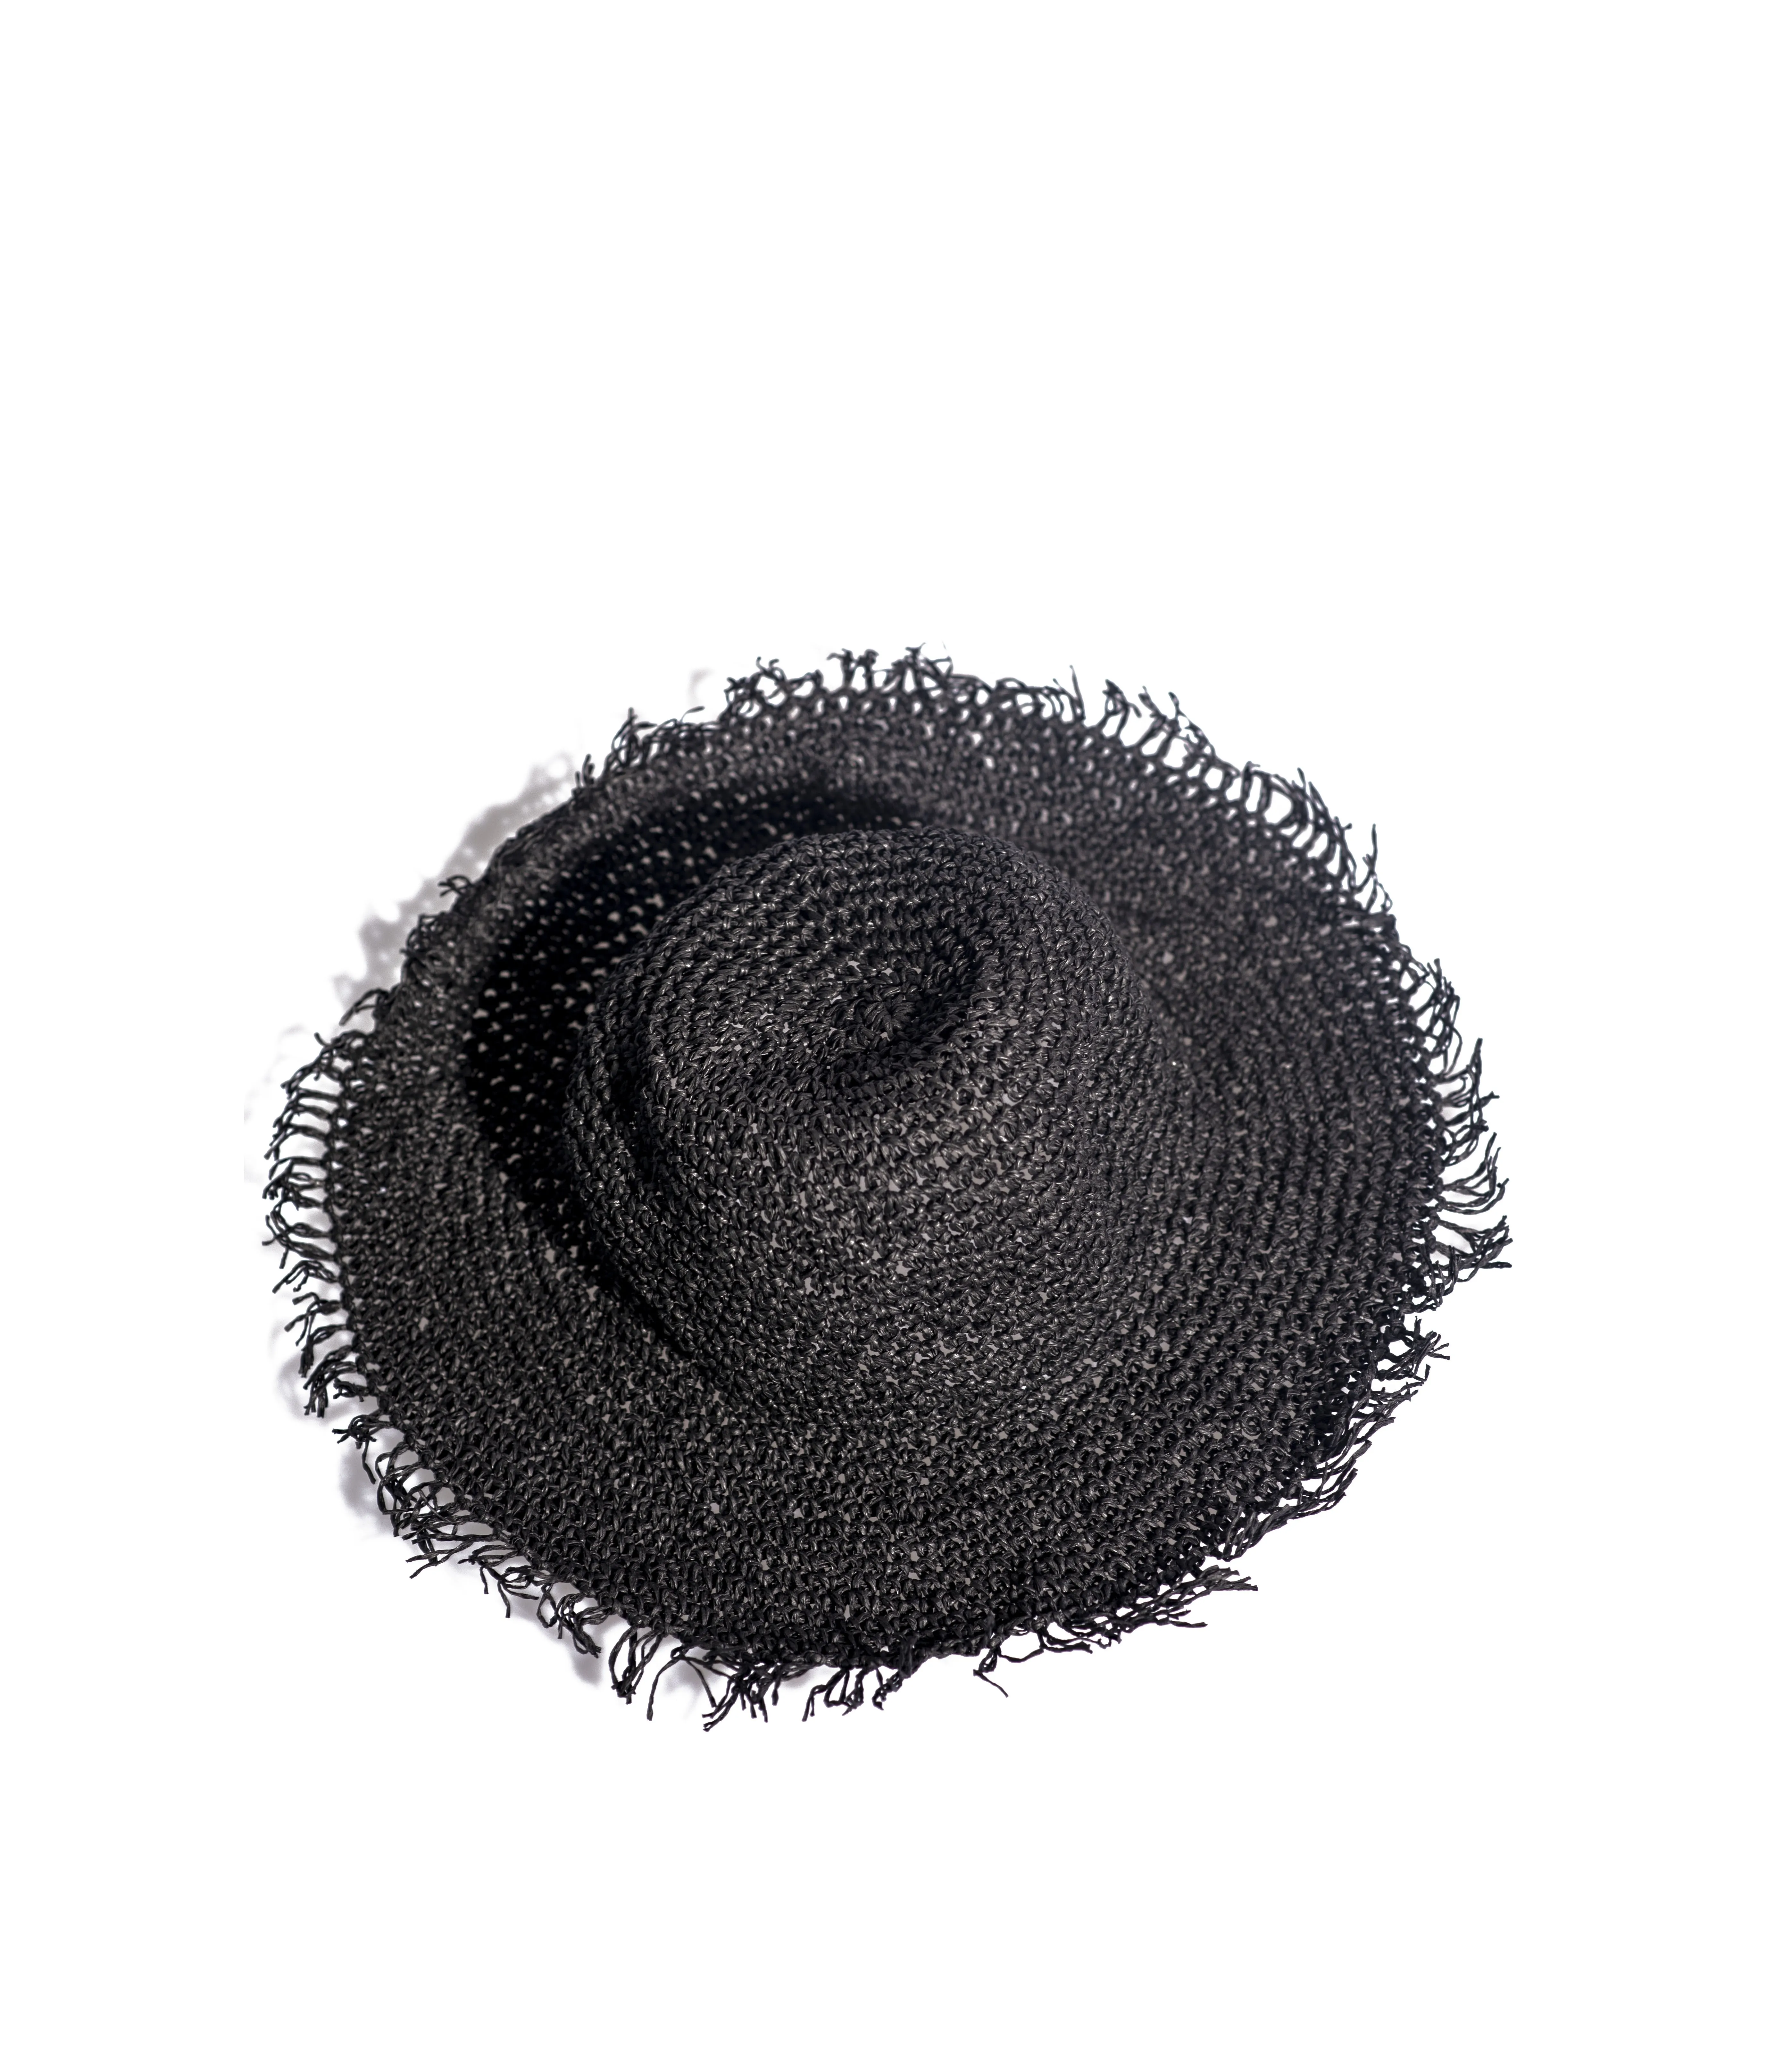 Шляпа Kavshak женская Соломенная, Пляжная, от солнца, с широкими полями, в стиле 2021 от AliExpress RU&CIS NEW